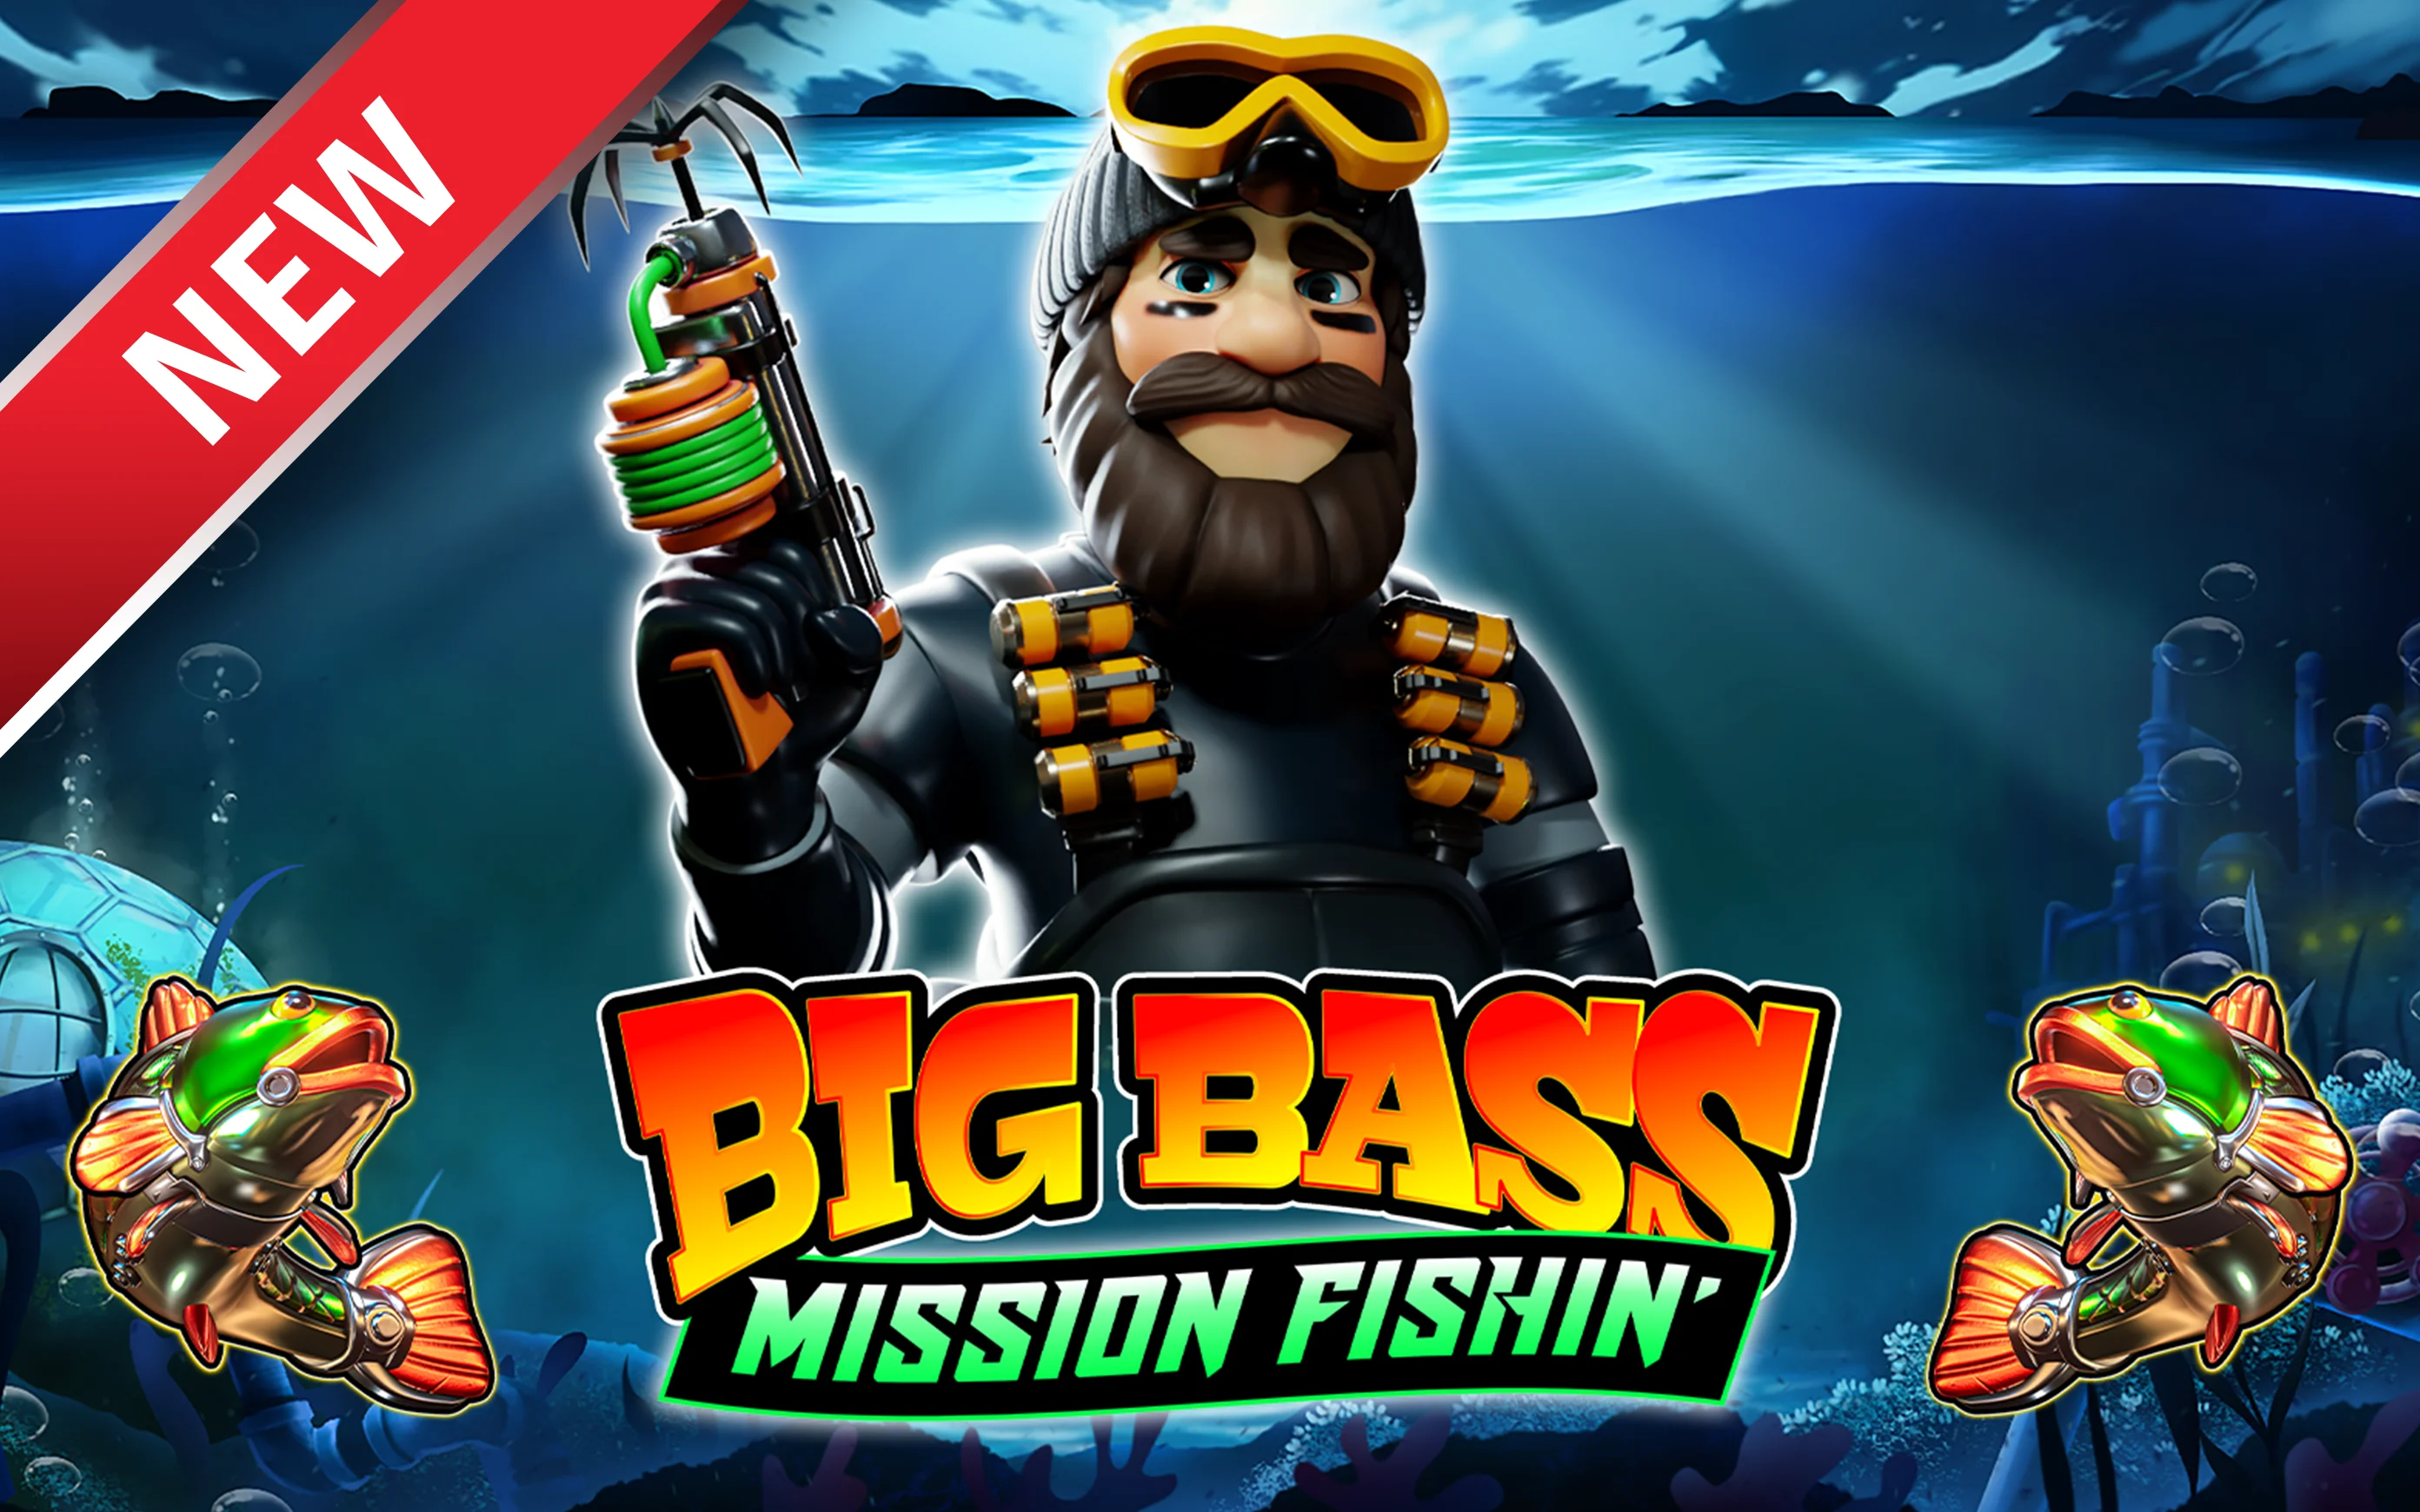 Speel Big Bass Mission Fishin’ op Starcasino.be online casino